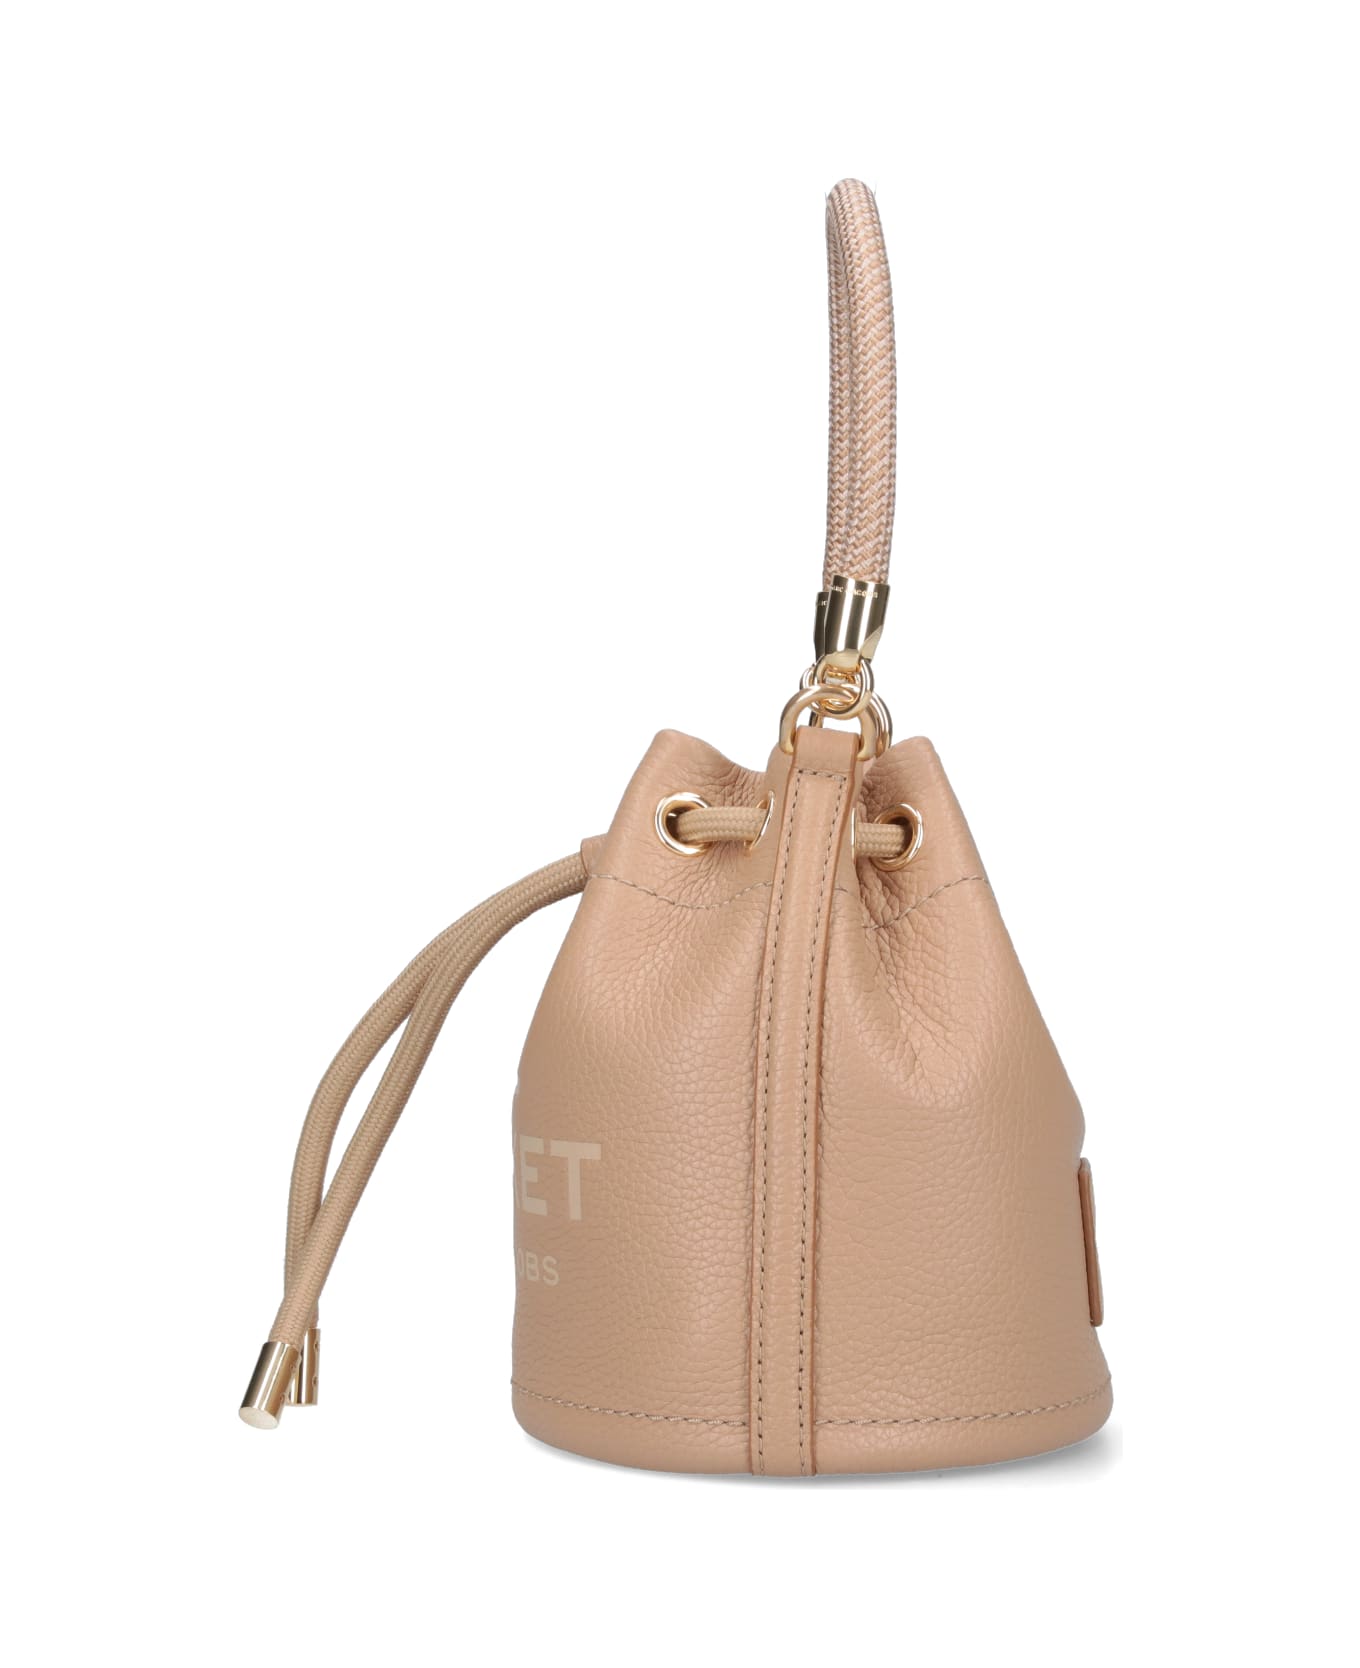 Marc Jacobs "the Leather Bucket" Mini Bag - Beige